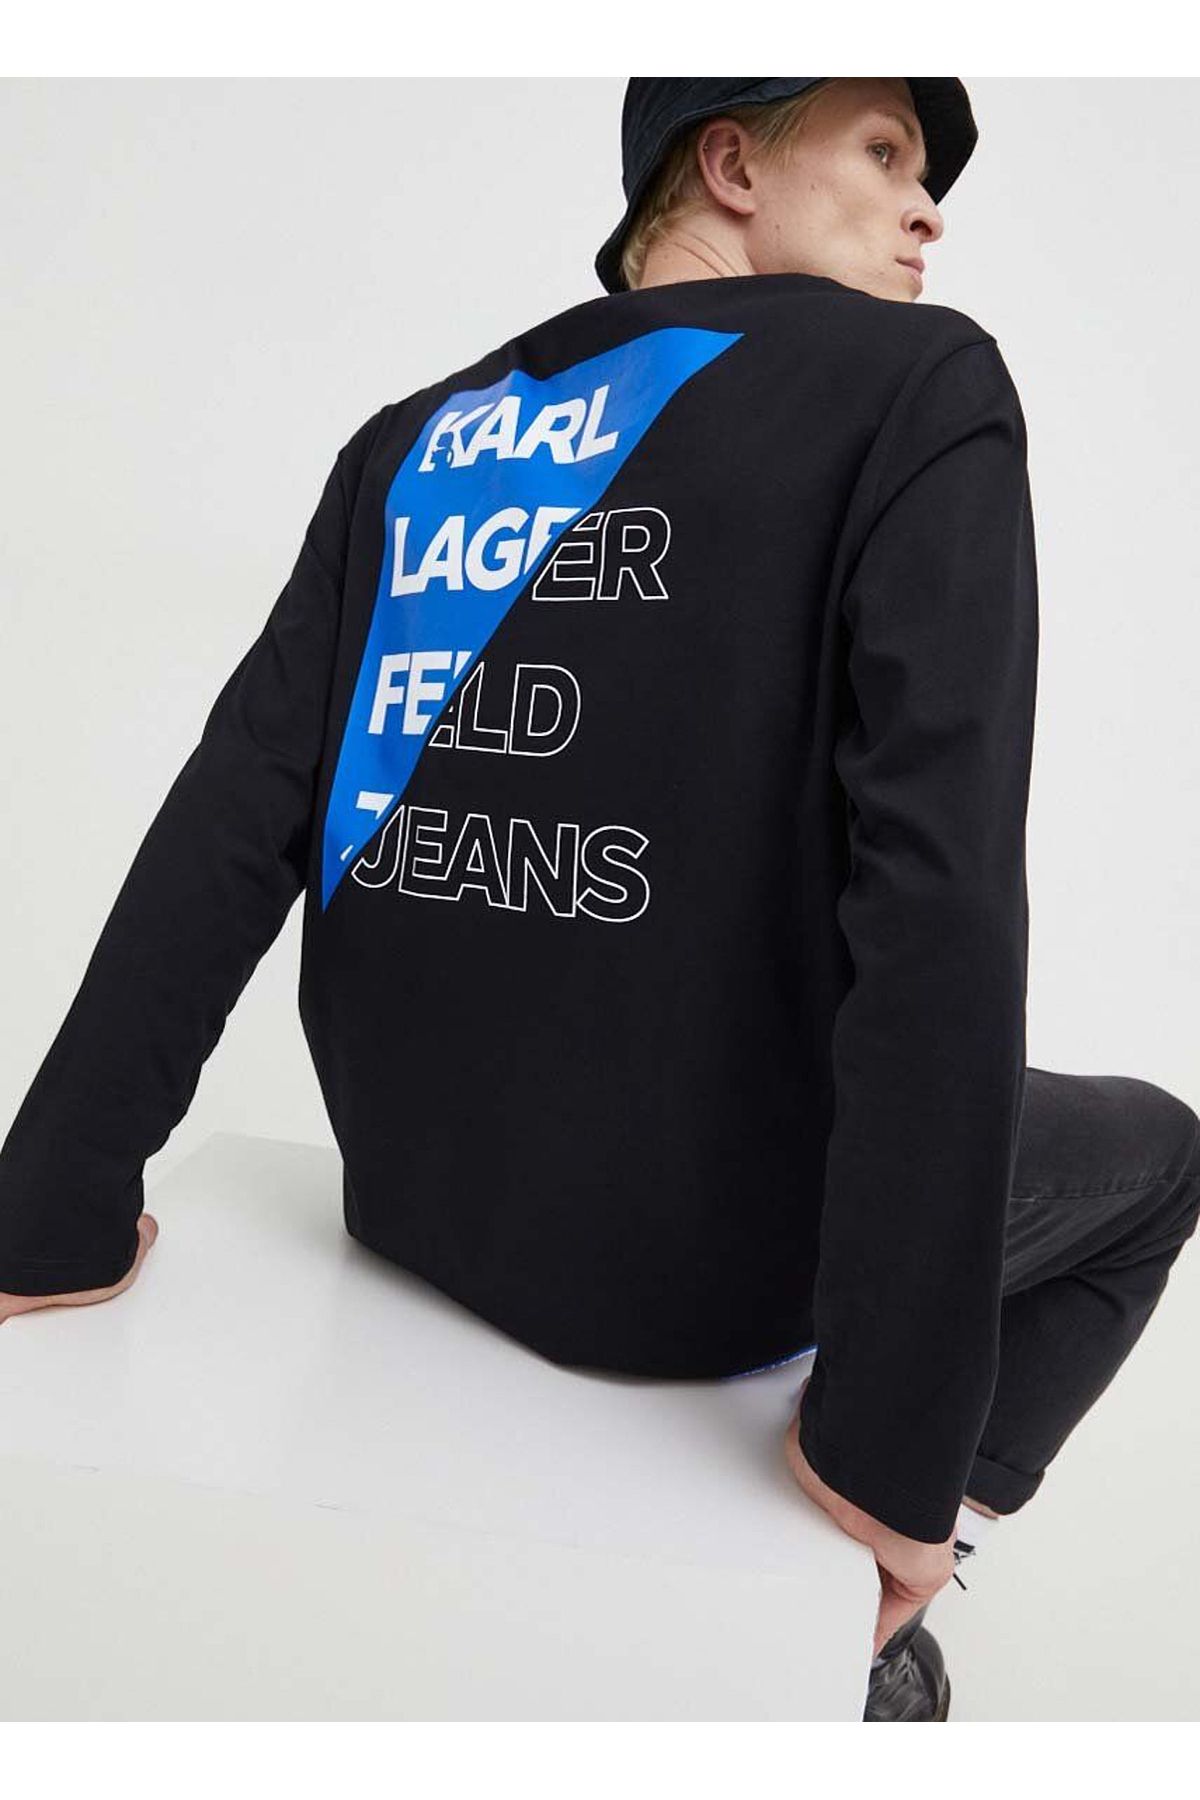 Karl Lagerfeld Jeans Bisiklet Yaka Siyah Erkek T-shirt 236d1703_klj Relaxed Cut Logo Tee